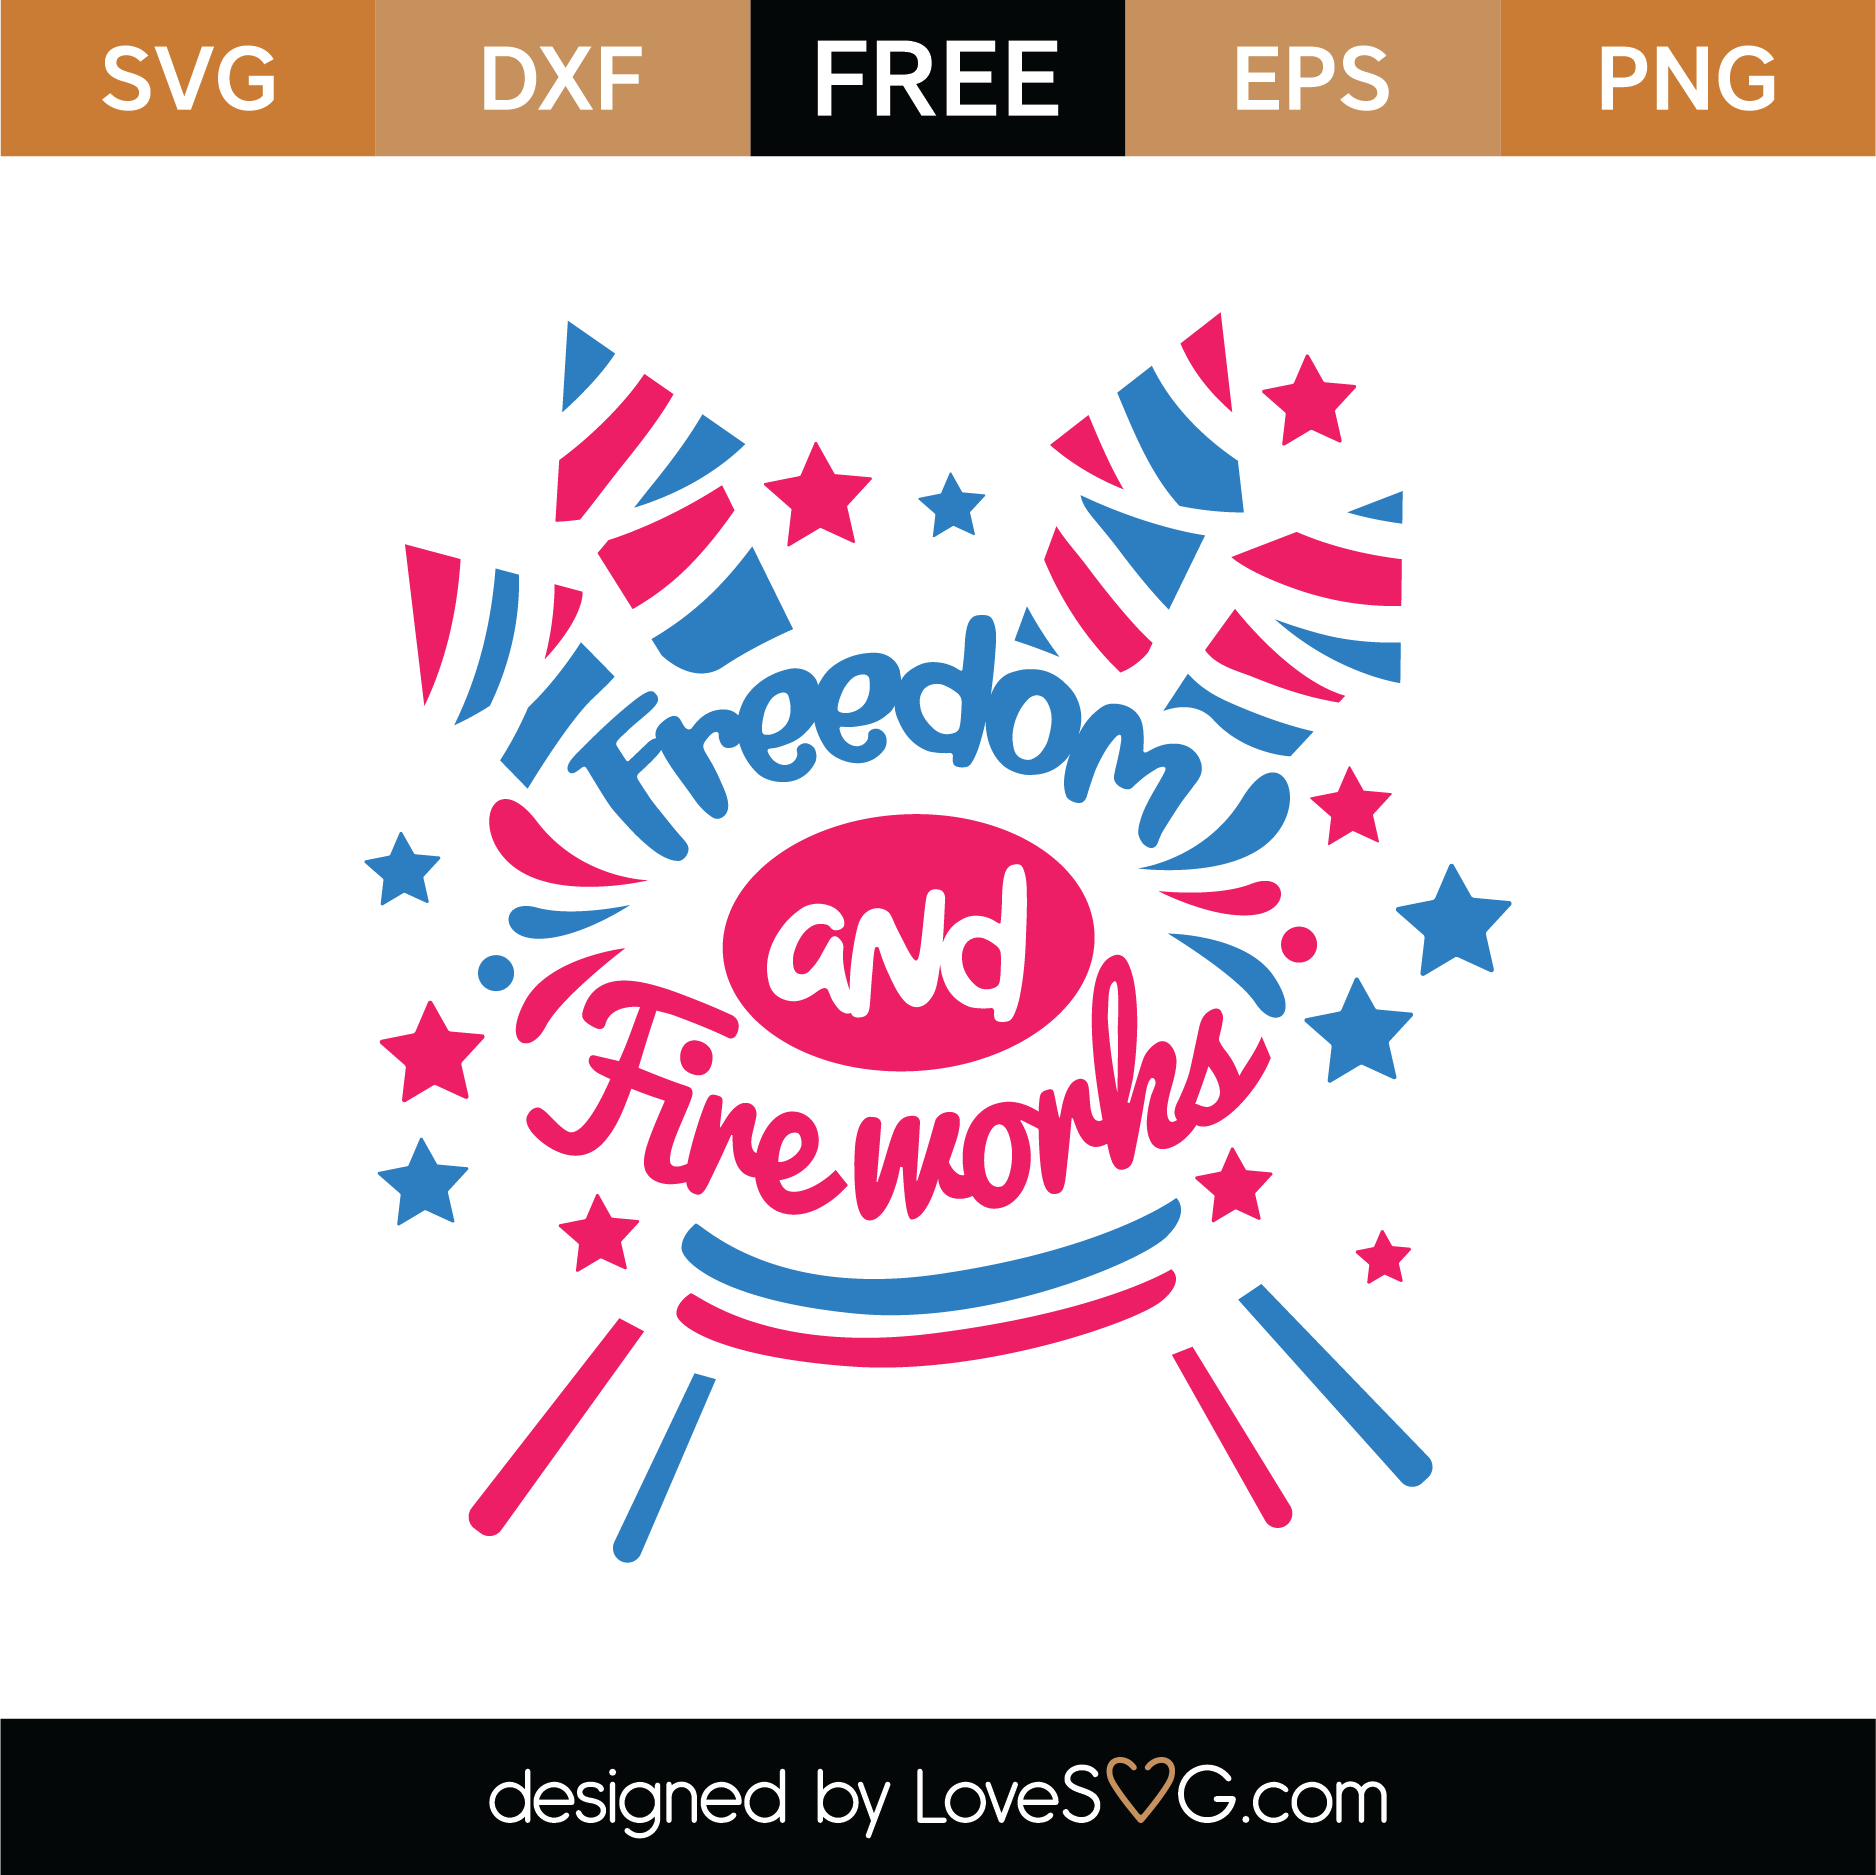 Download Free Freedom and Fireworks SVG Cut File | Lovesvg.com